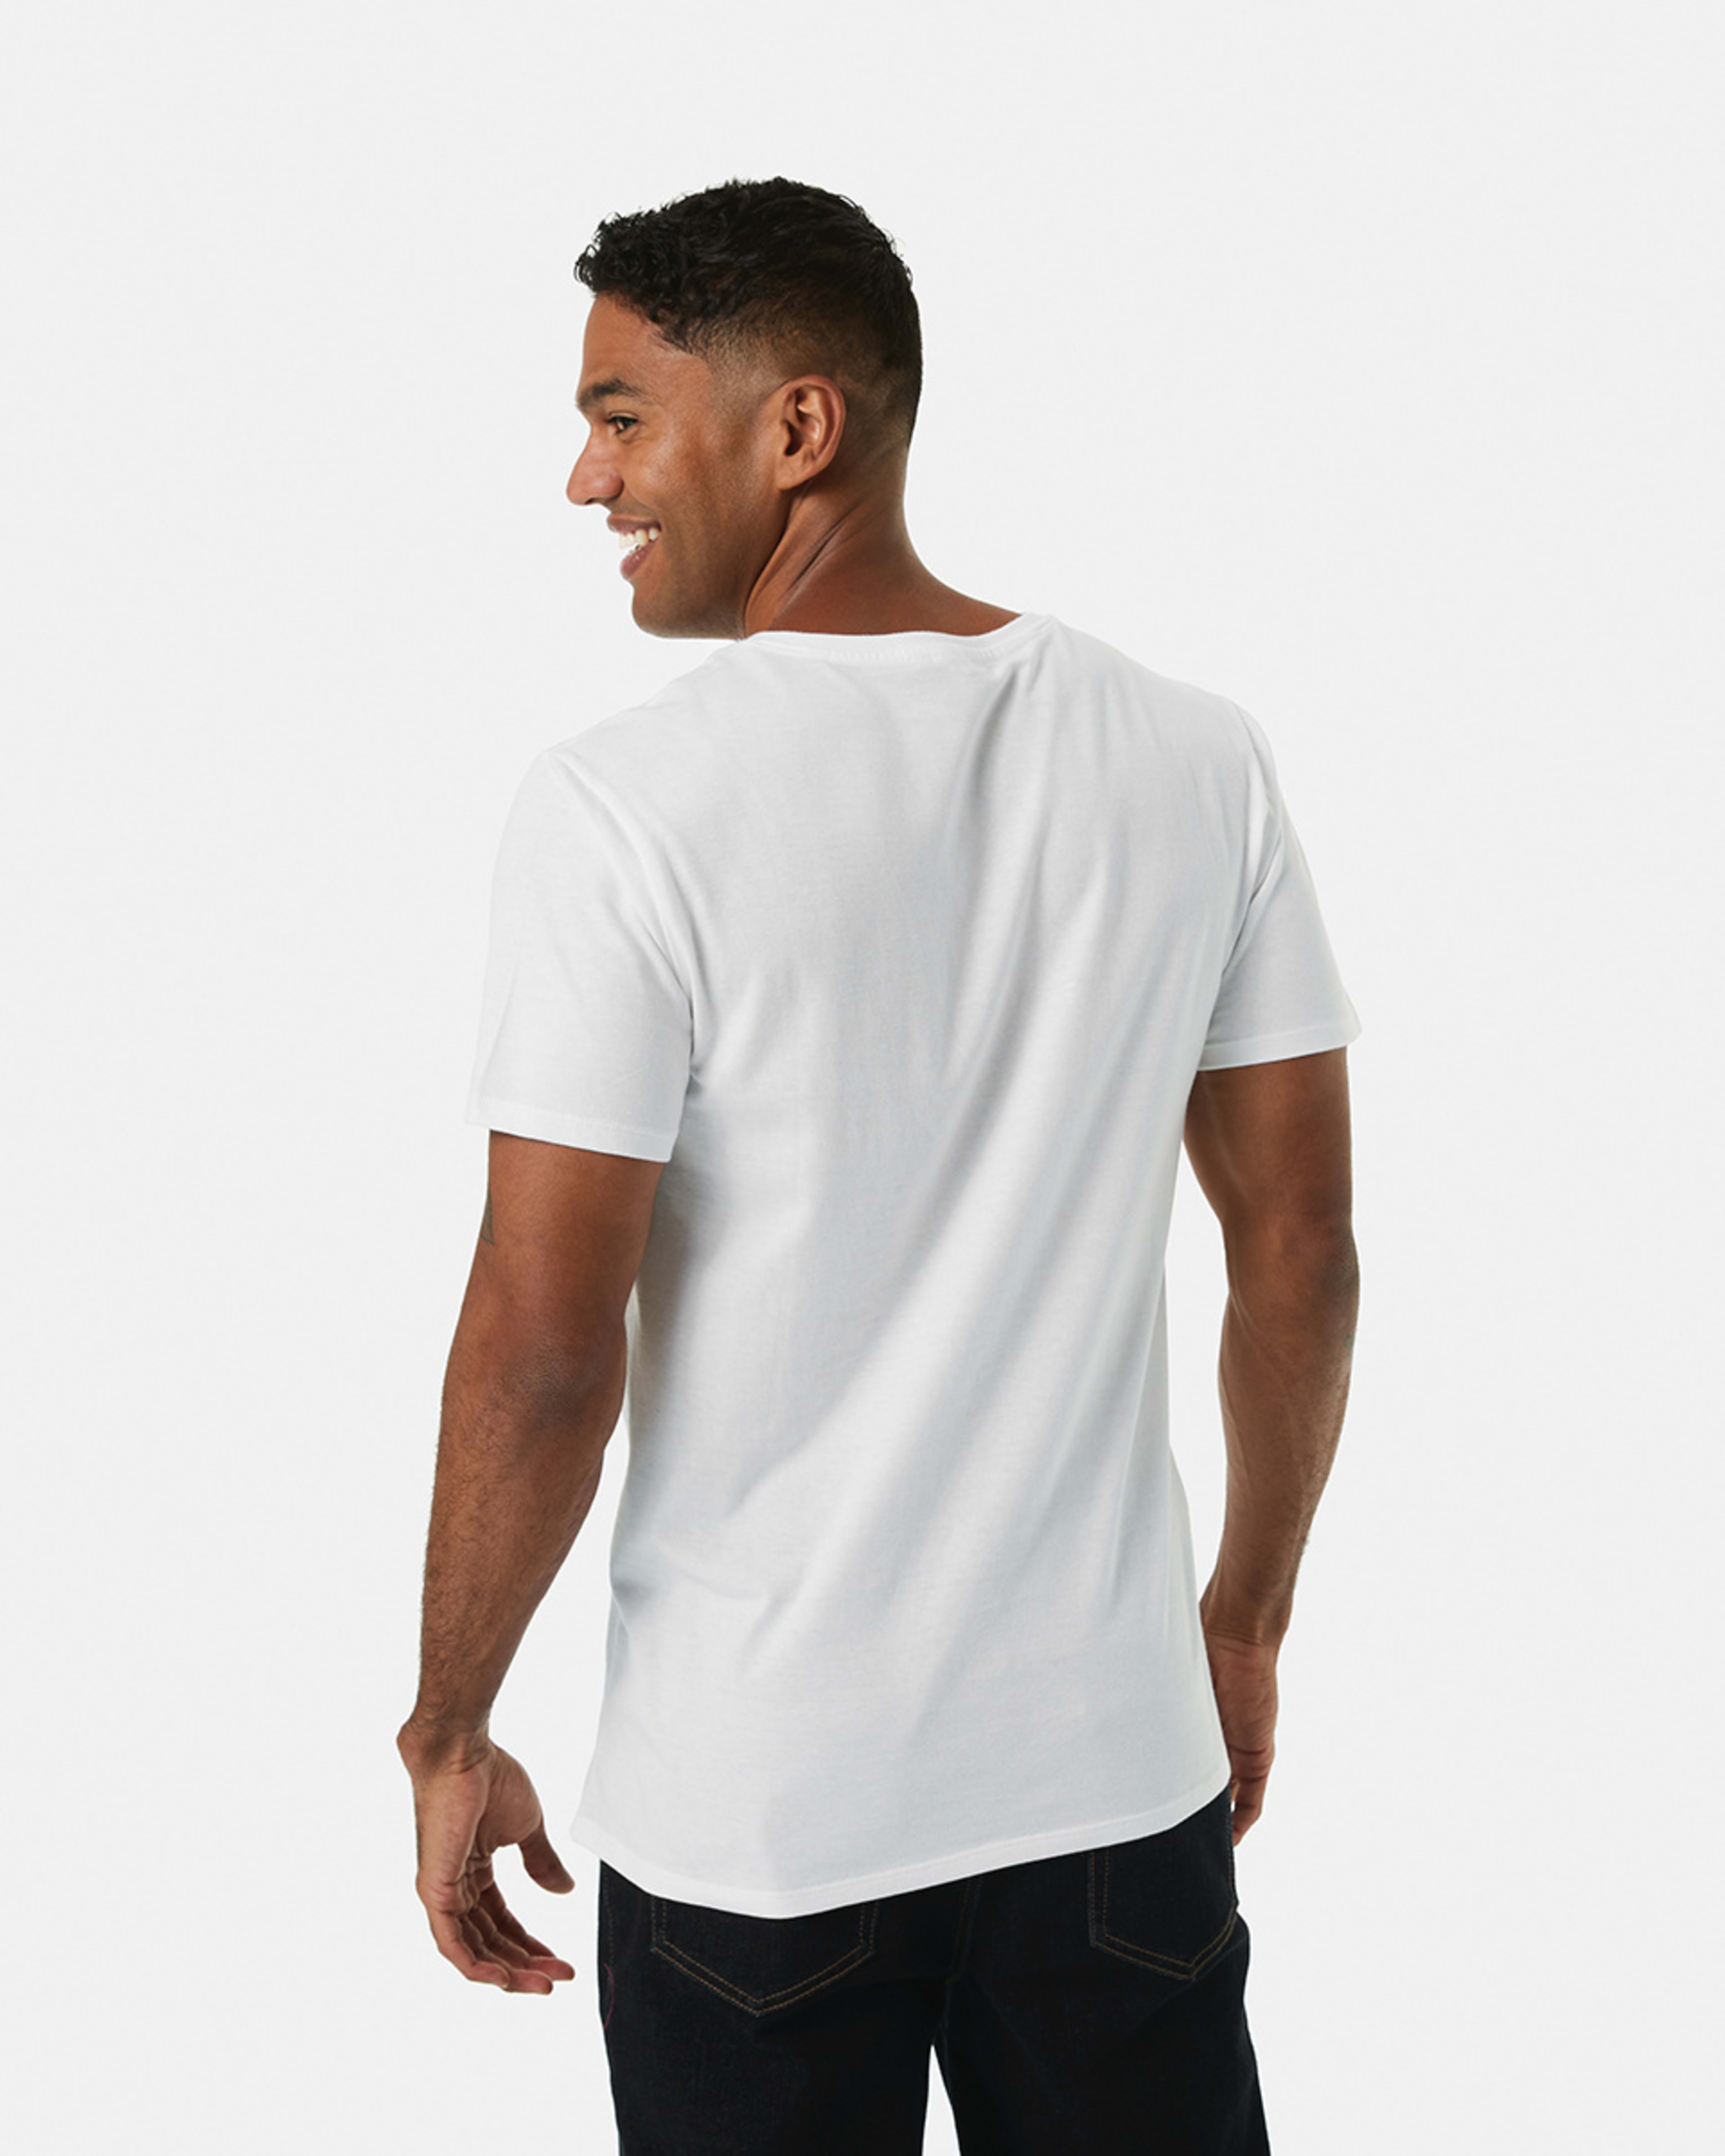 Plain V-Neck T-shirt - Kmart